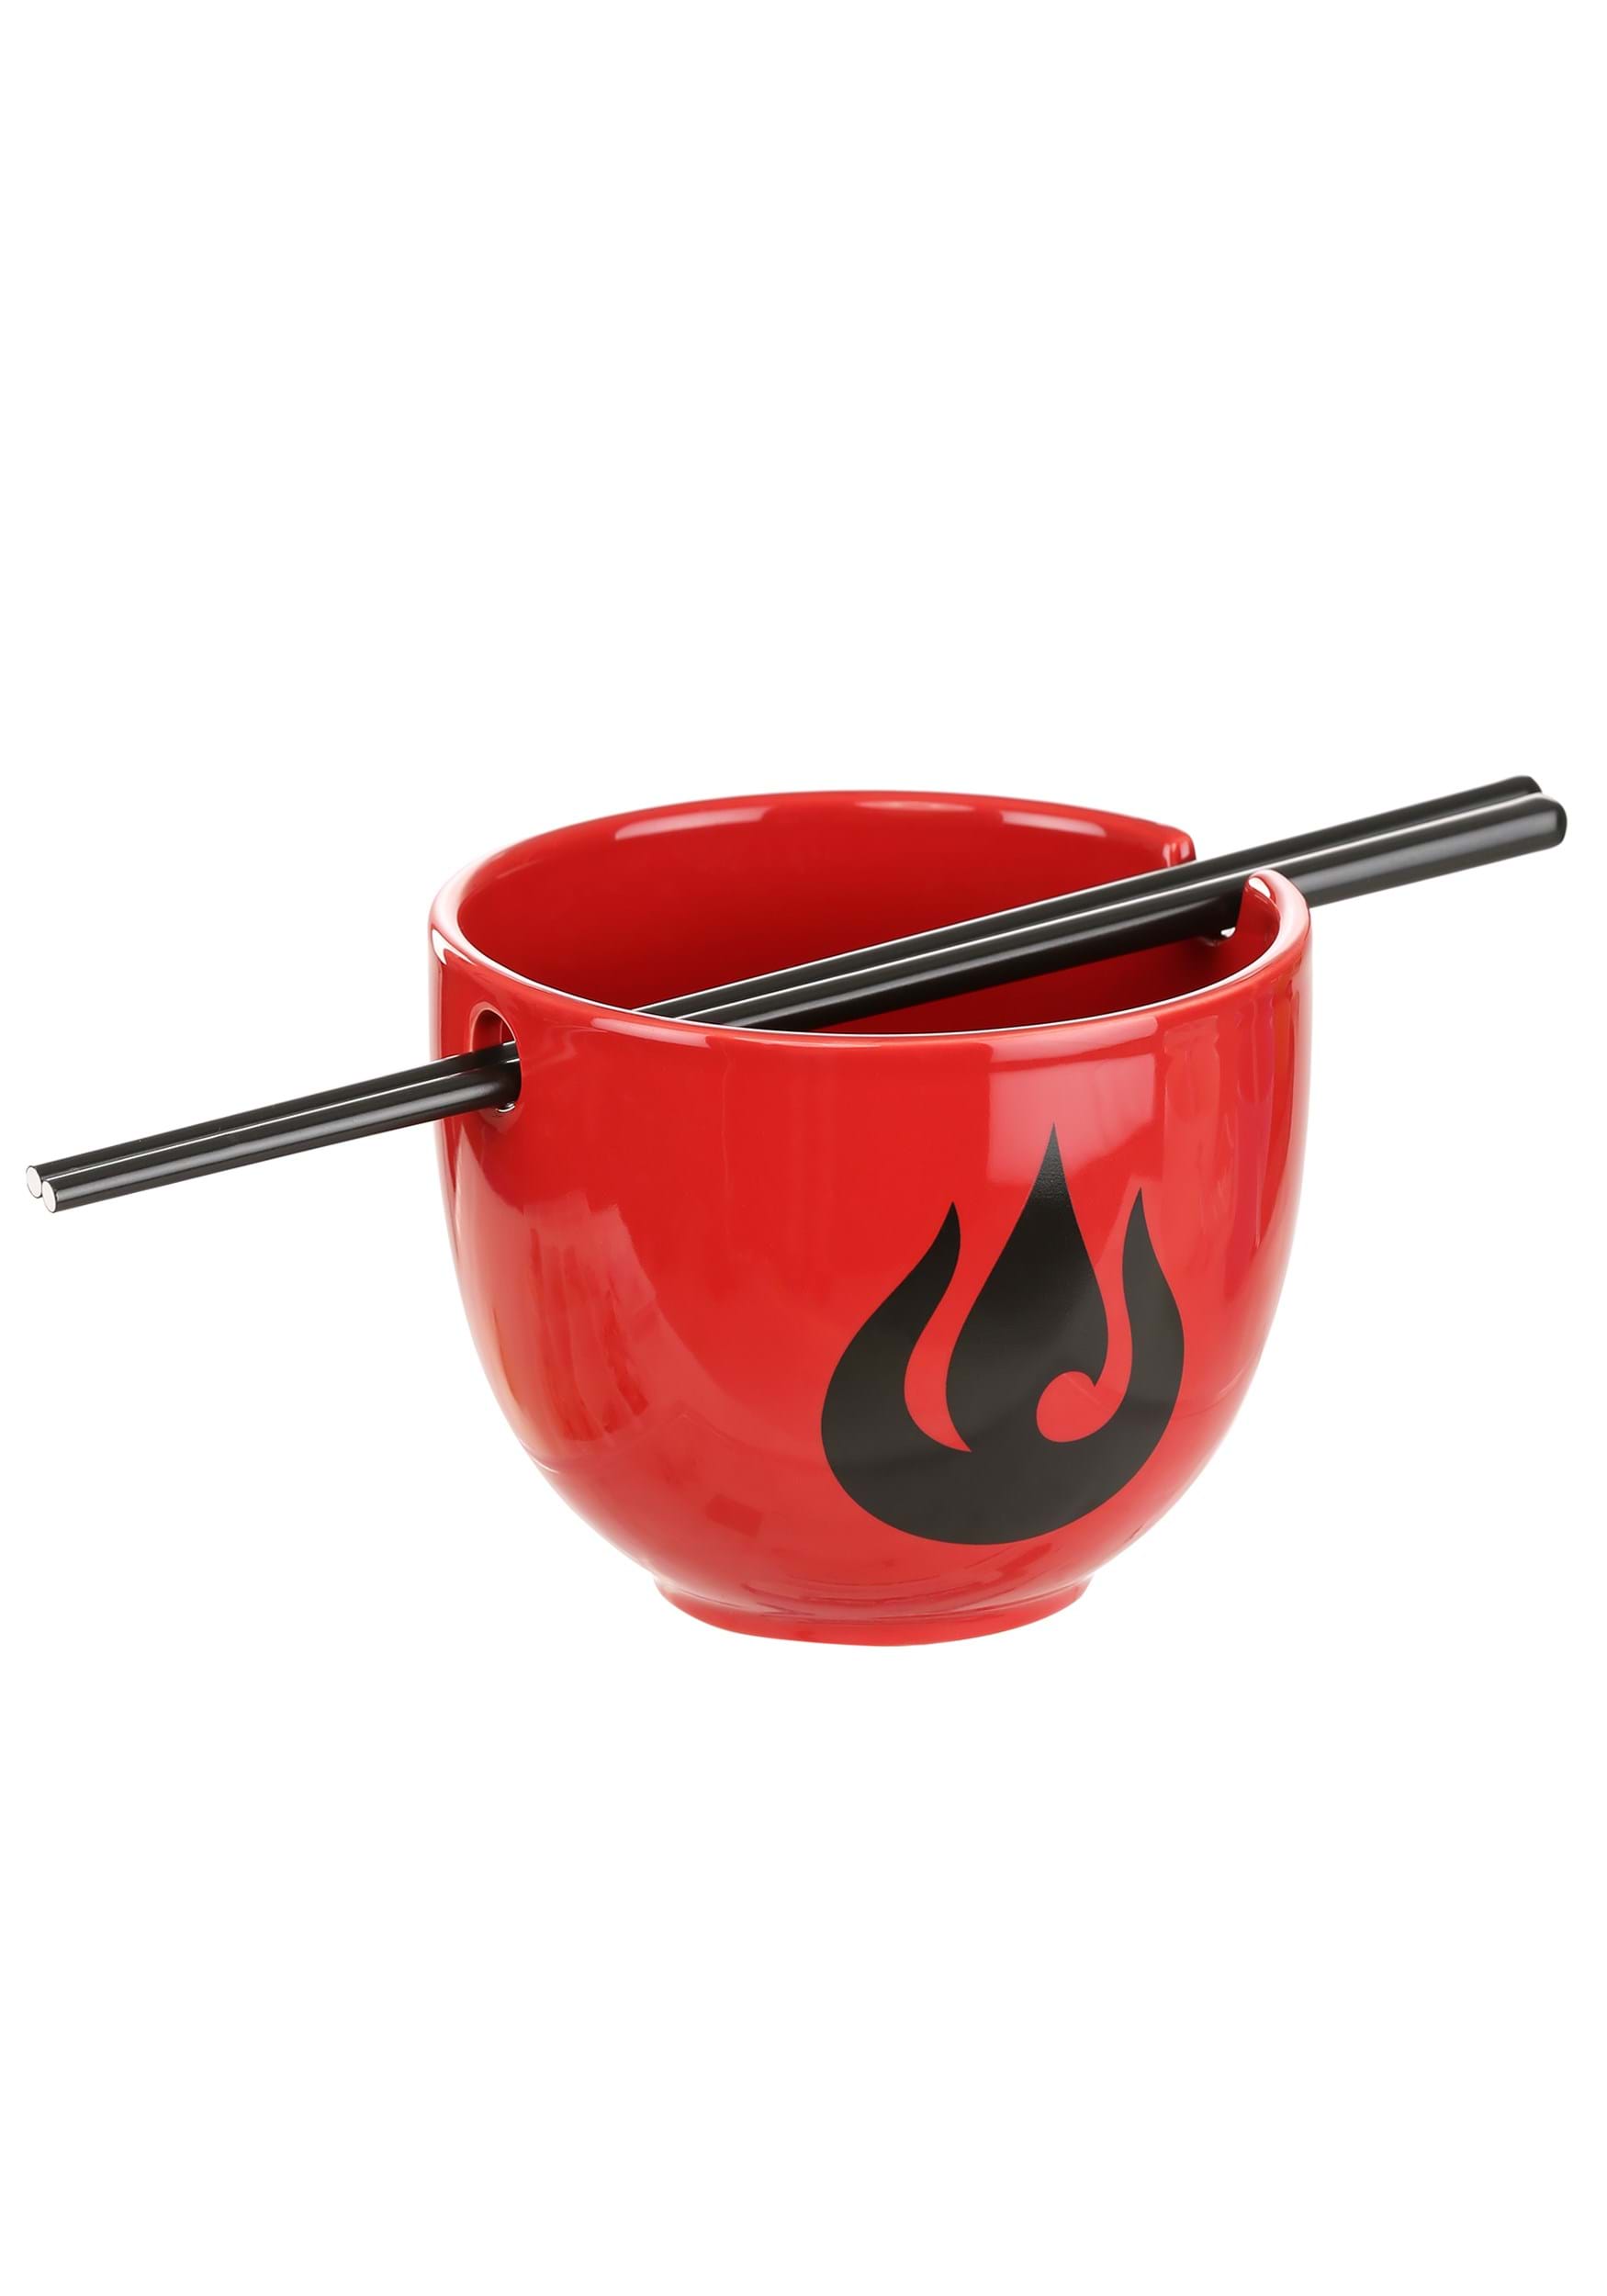 Avatar The Last Airbender Fire Nation Ramen Bowl with Chopsticks